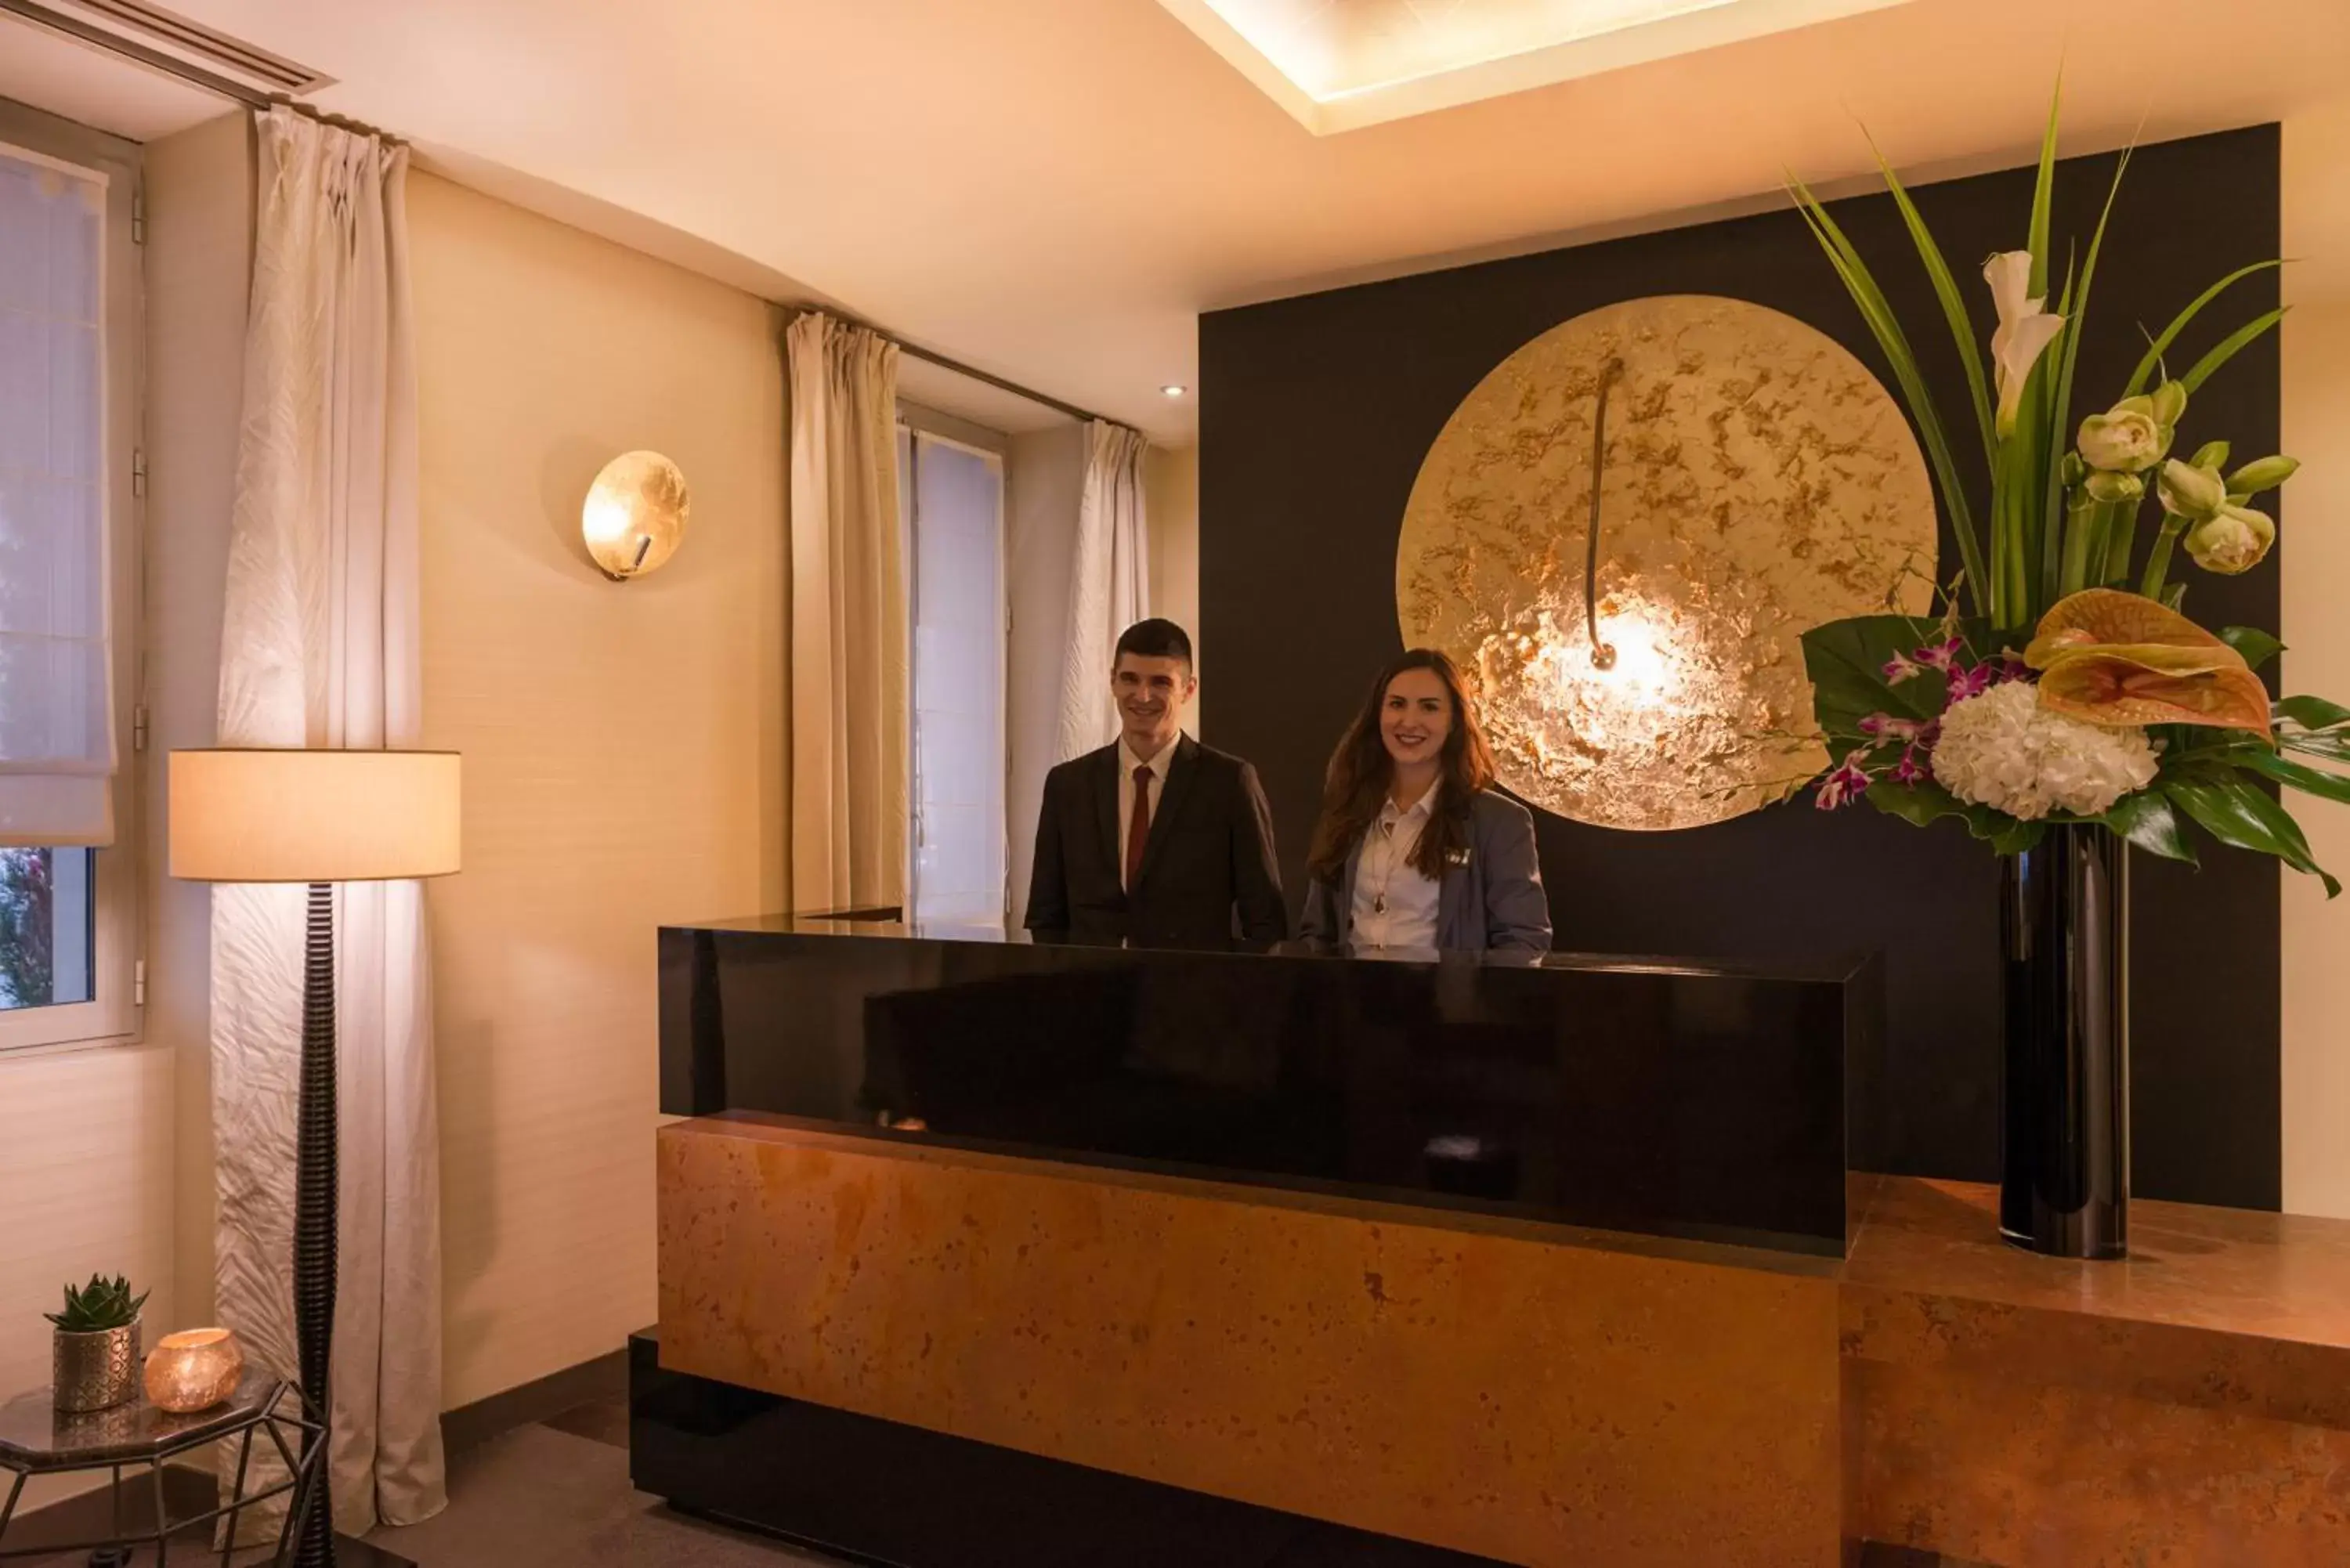 Lobby or reception in Hôtel La Bourdonnais by Inwood Hotels